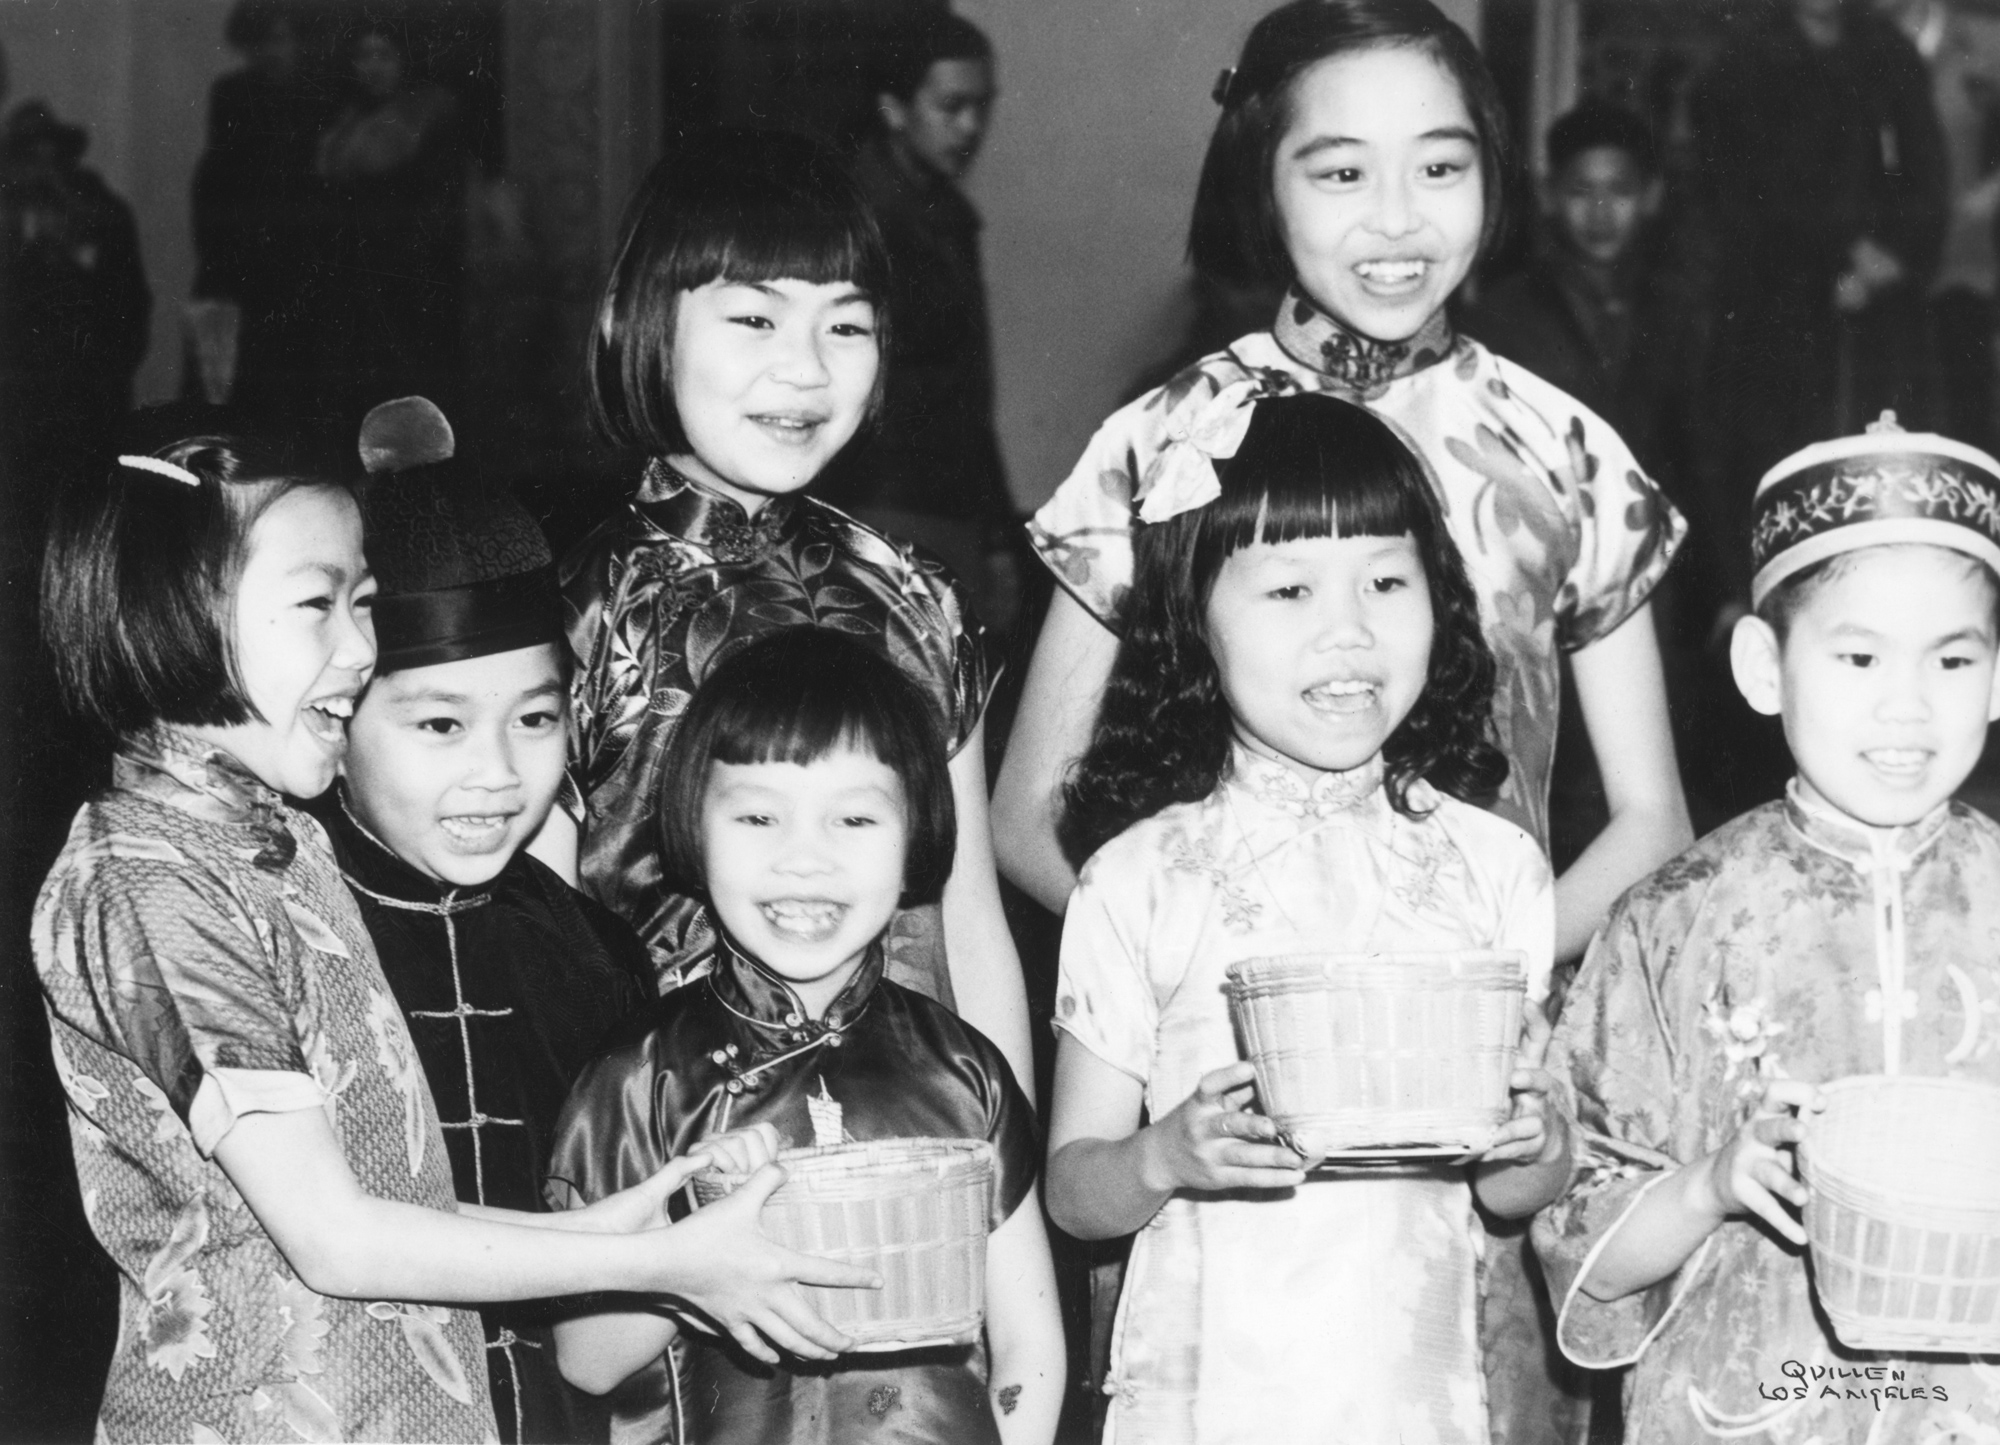 Children singing in traditional dress (c. 1940)